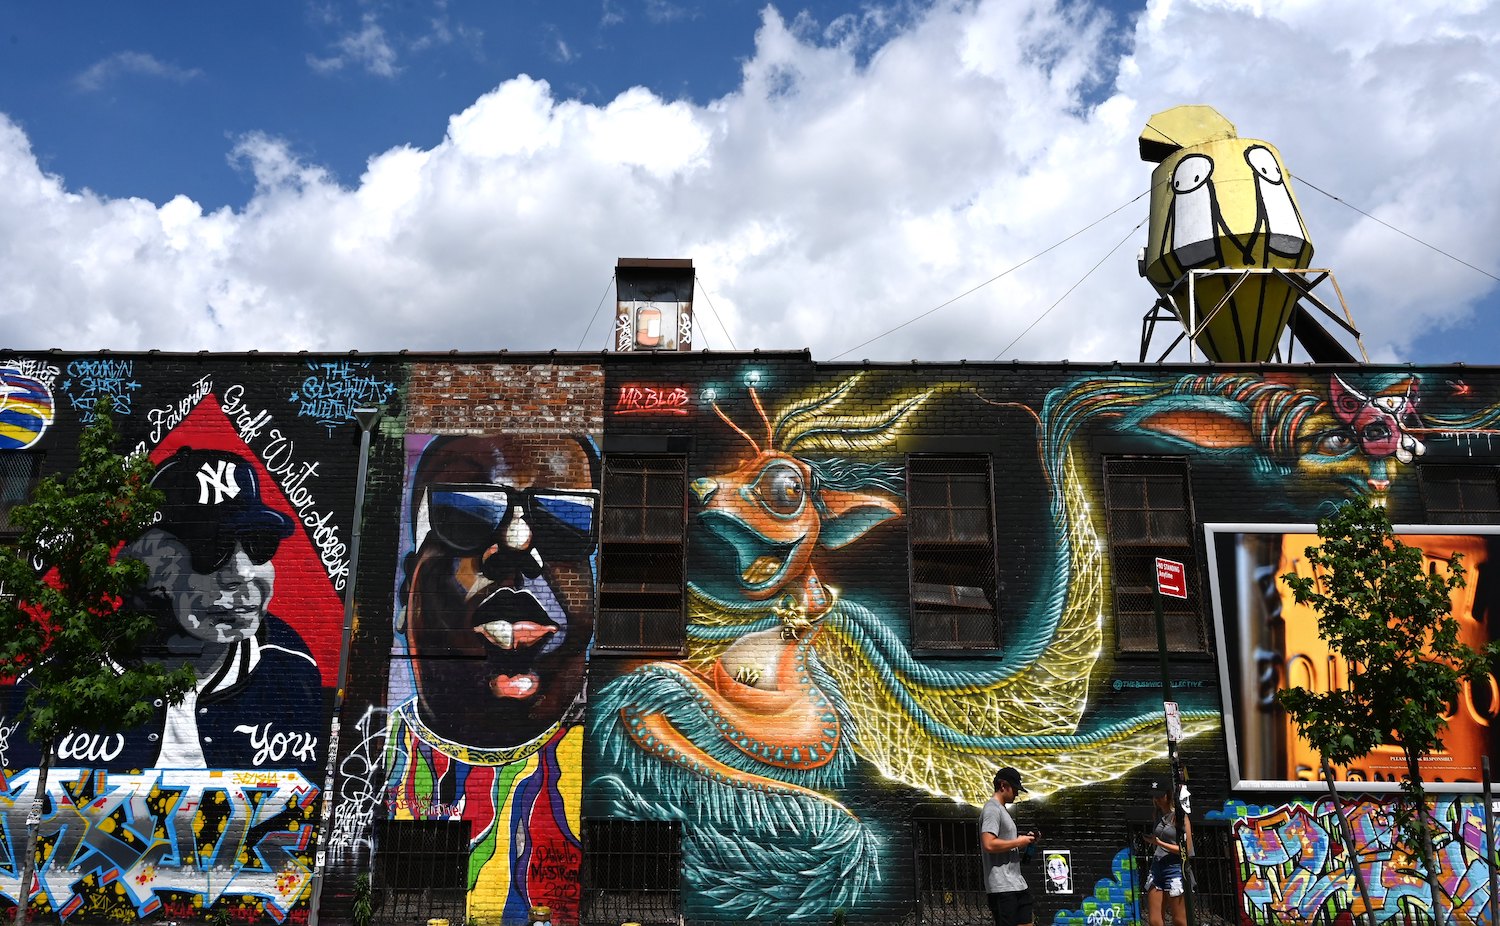 vibrant murals lining a street in Bushwick Brooklyn
